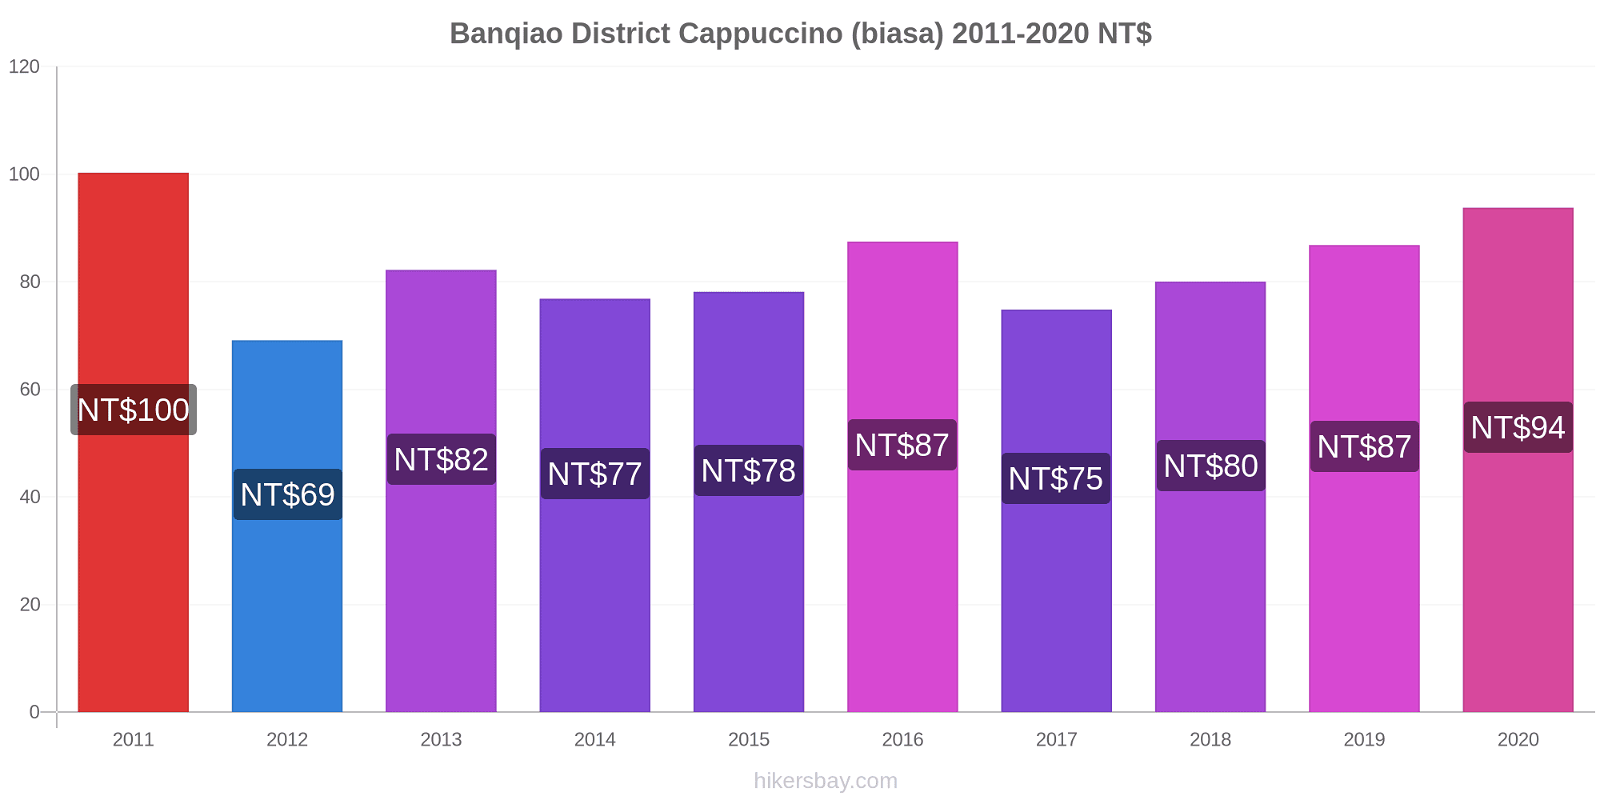 Banqiao District perubahan harga Cappuccino (biasa) hikersbay.com